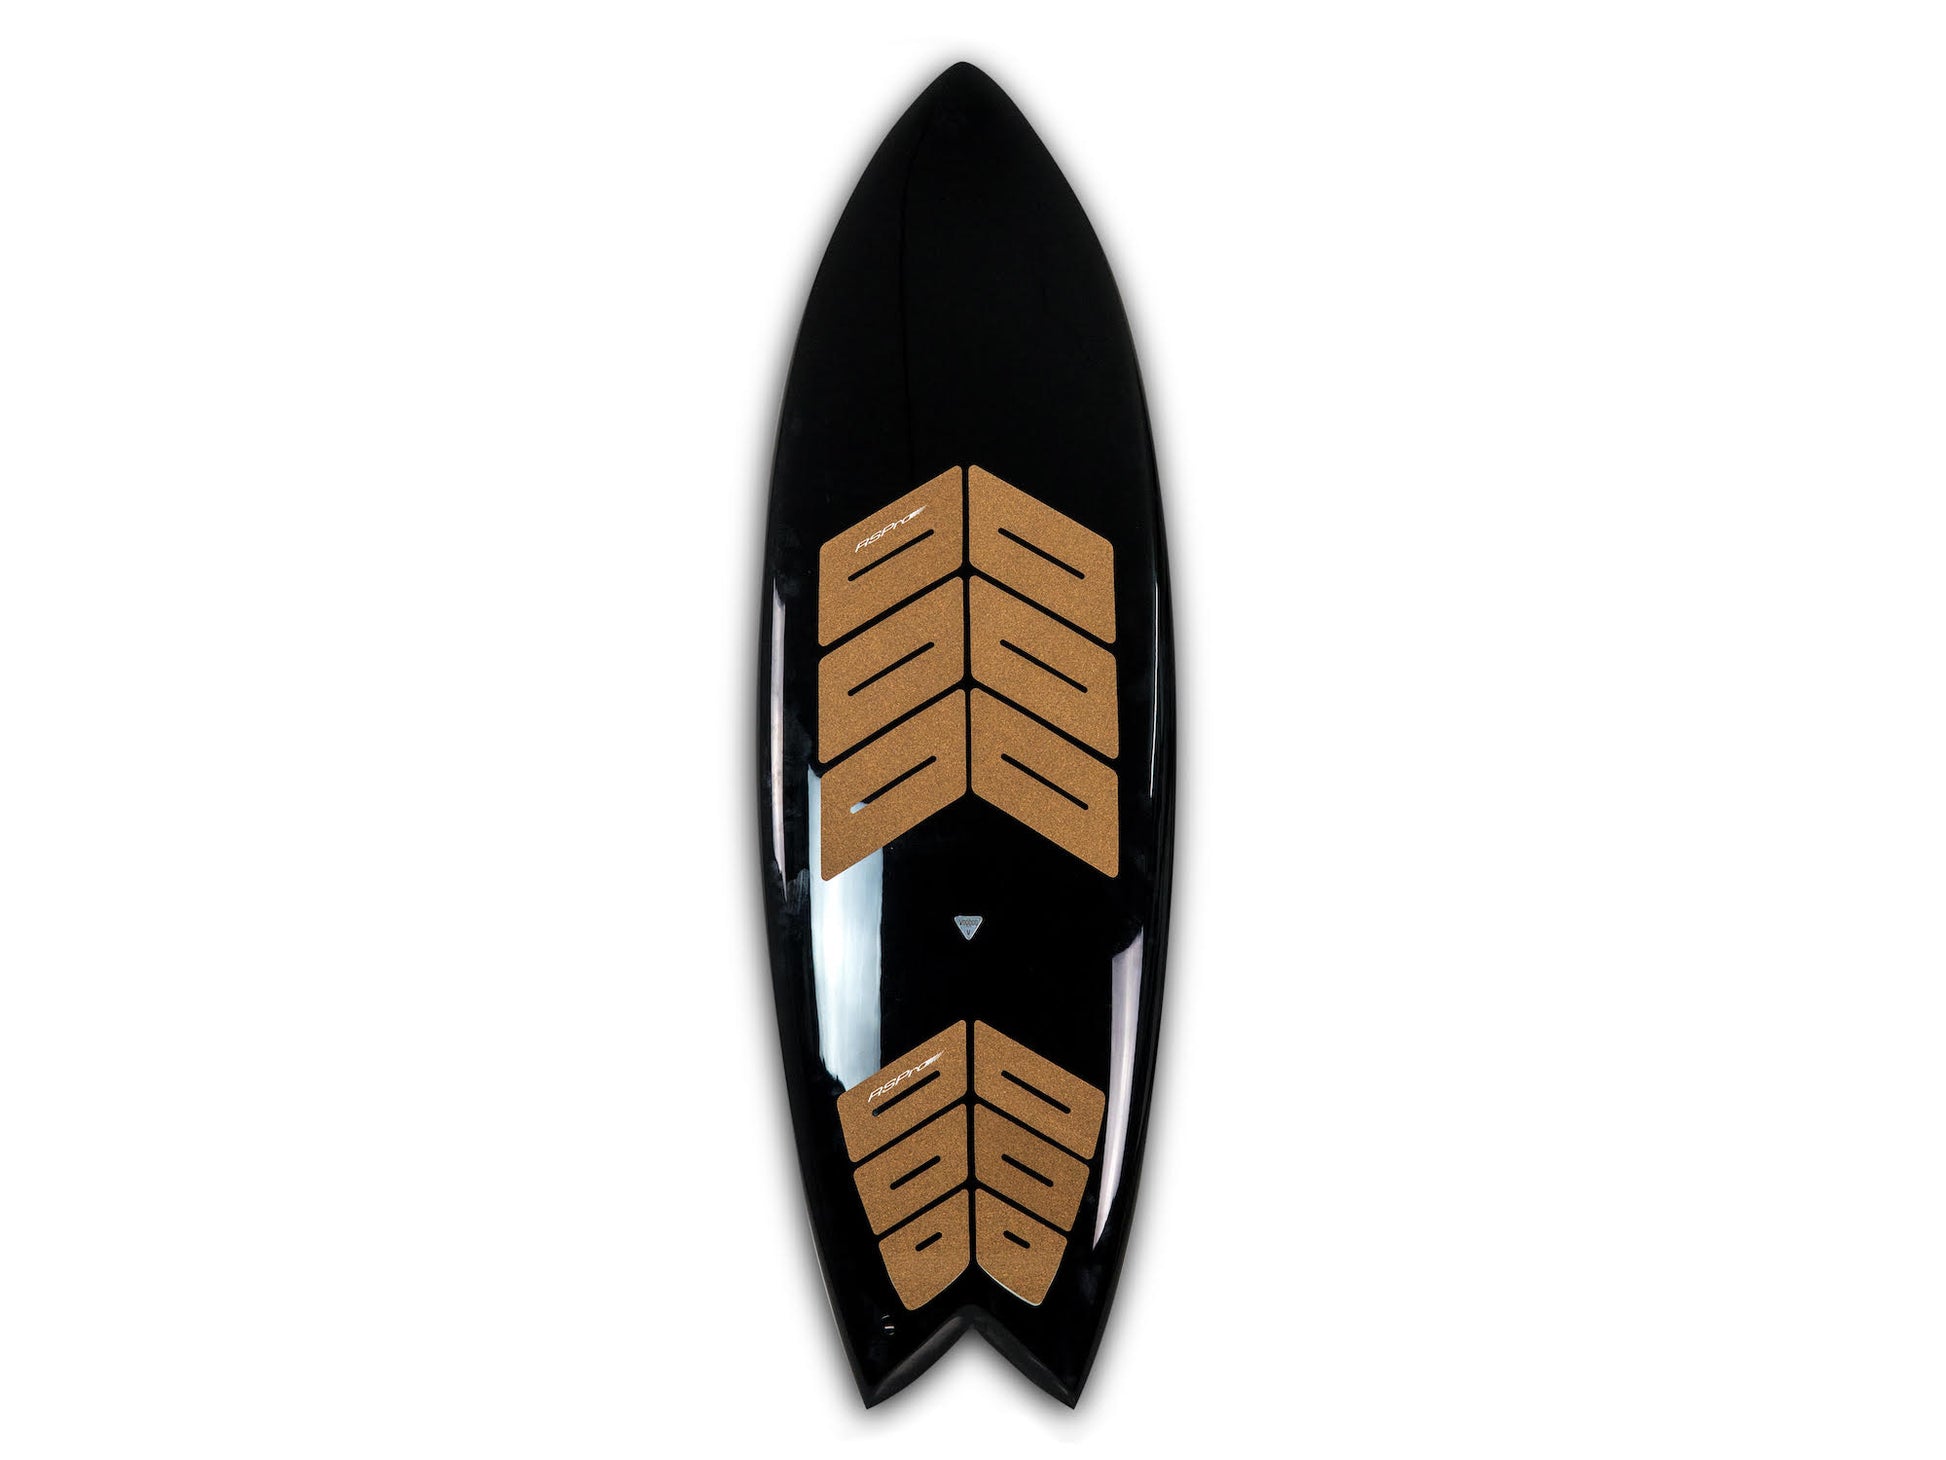 RSPro cork surfboard deck traction - eco-friendly wax alternative.